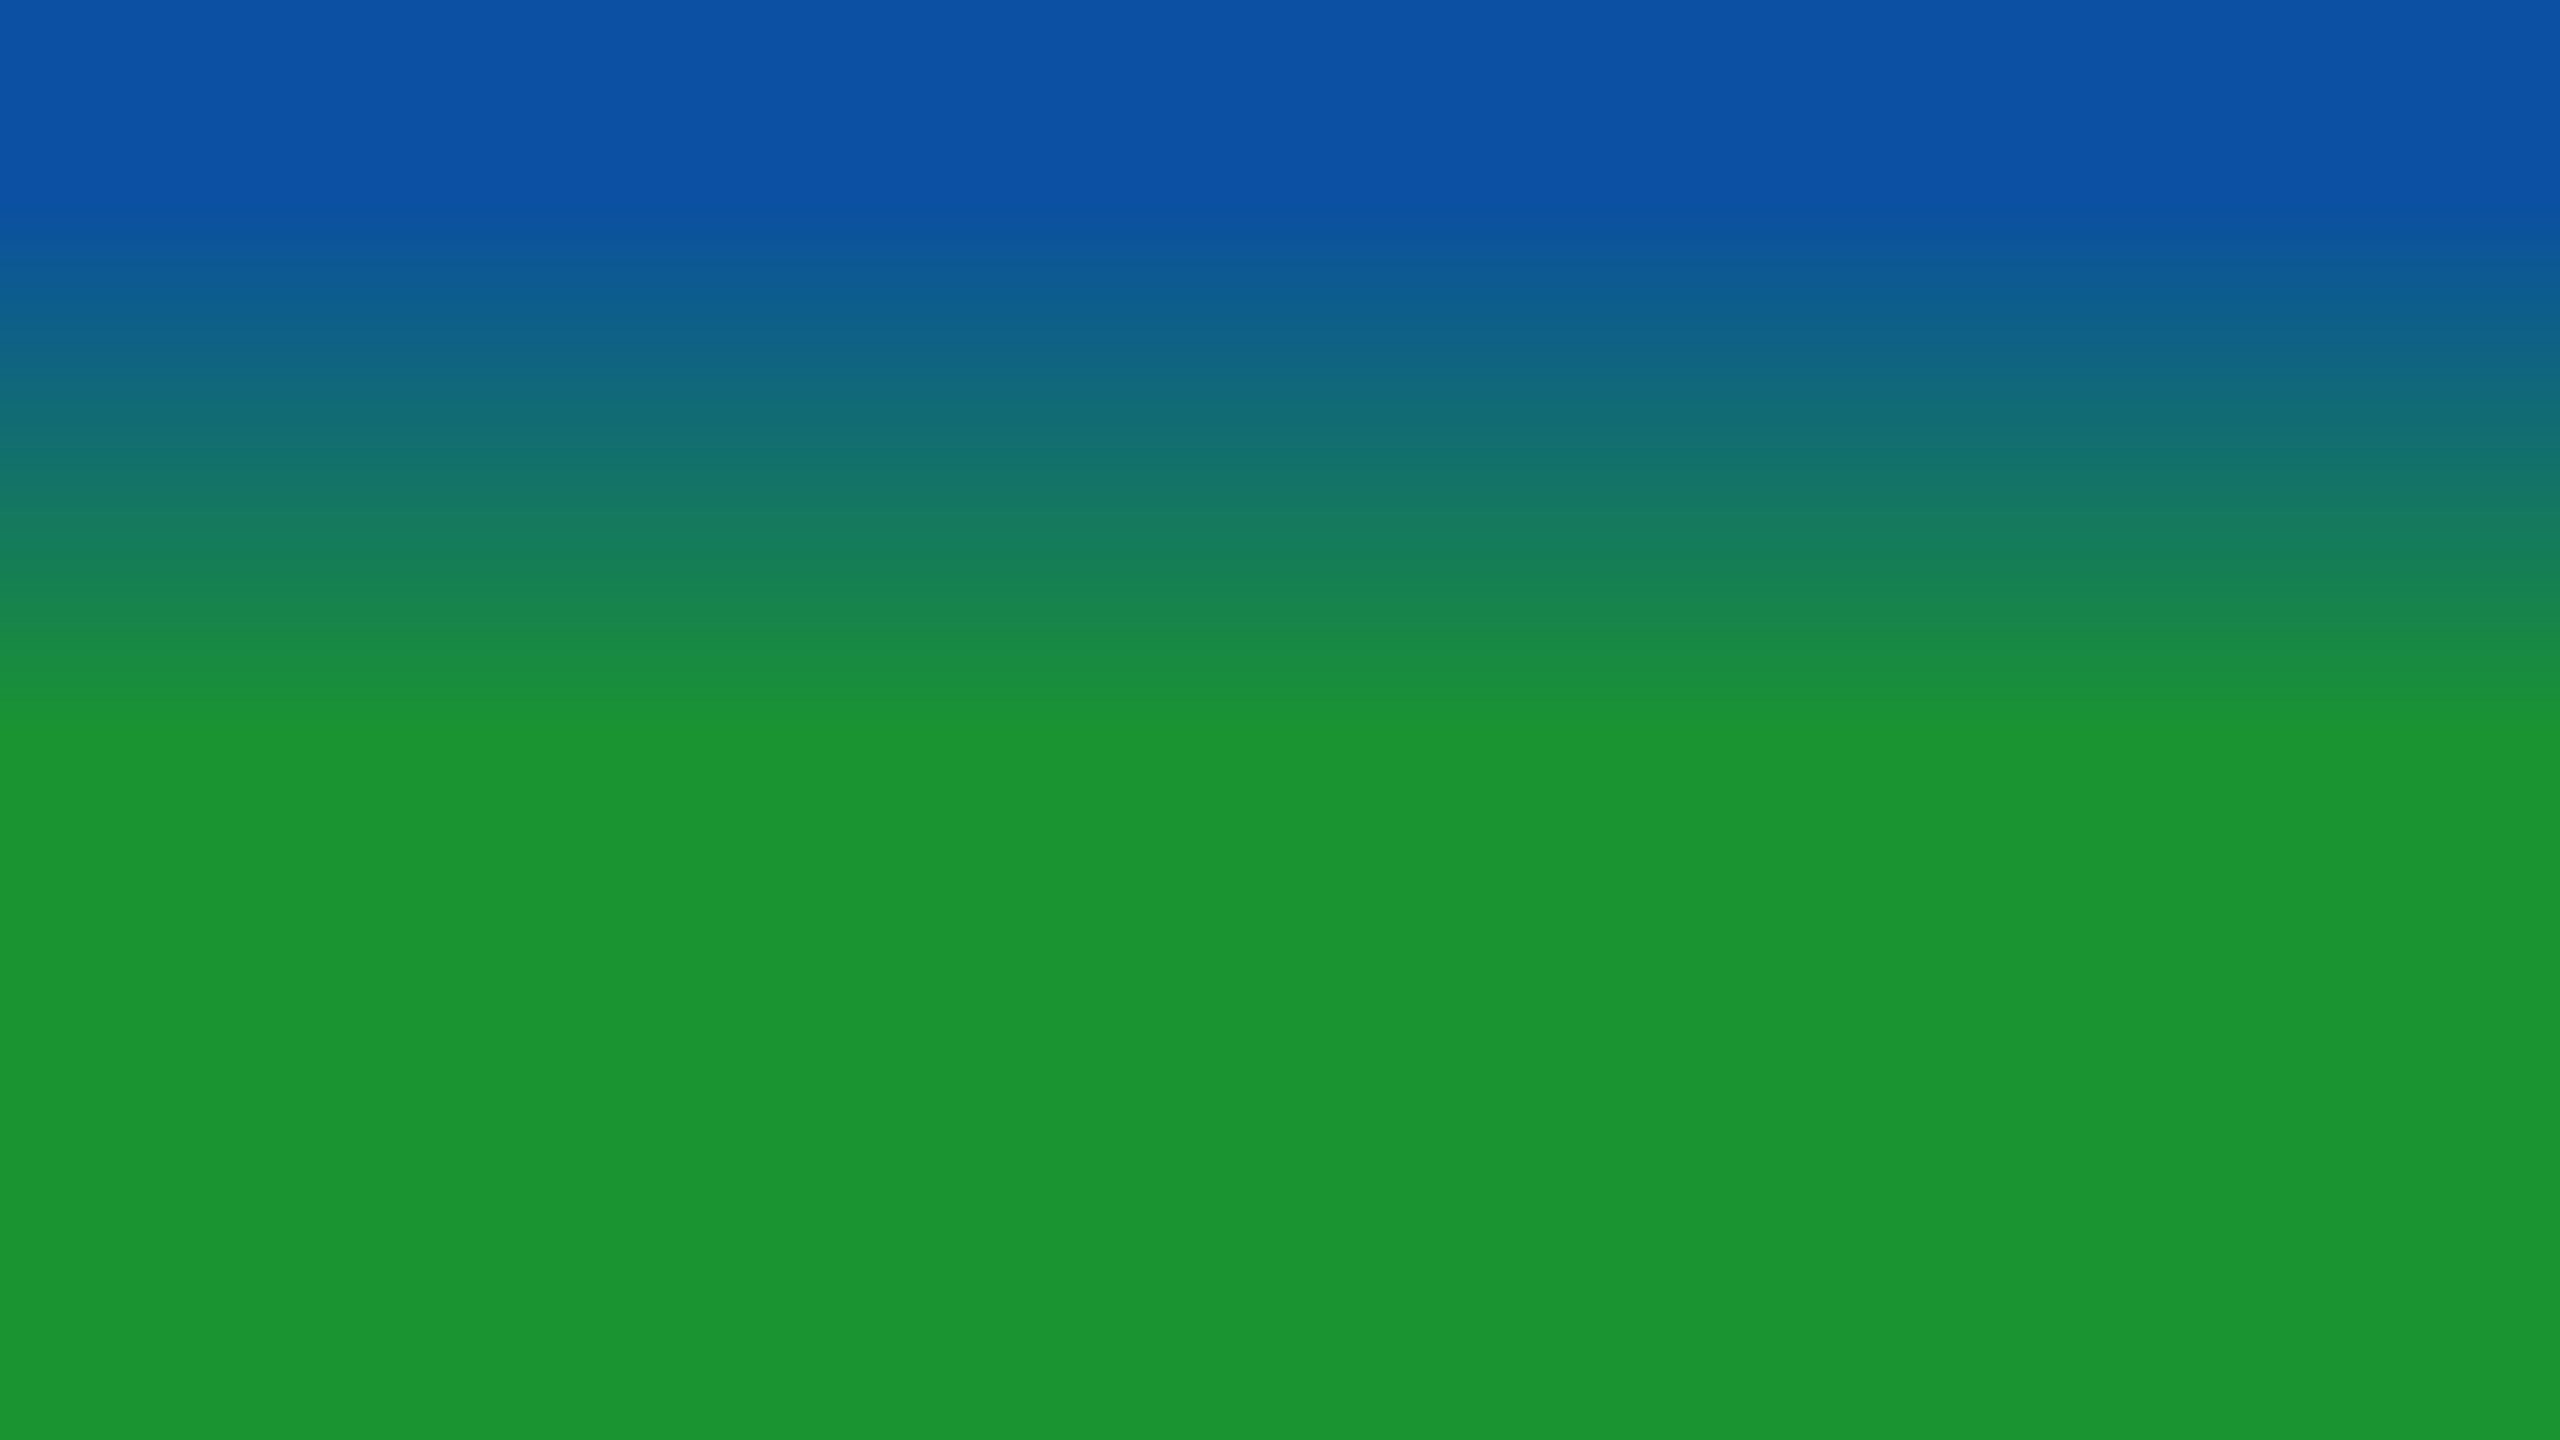 simple colour wallpaper,green,blue,aqua,turquoise,daytime